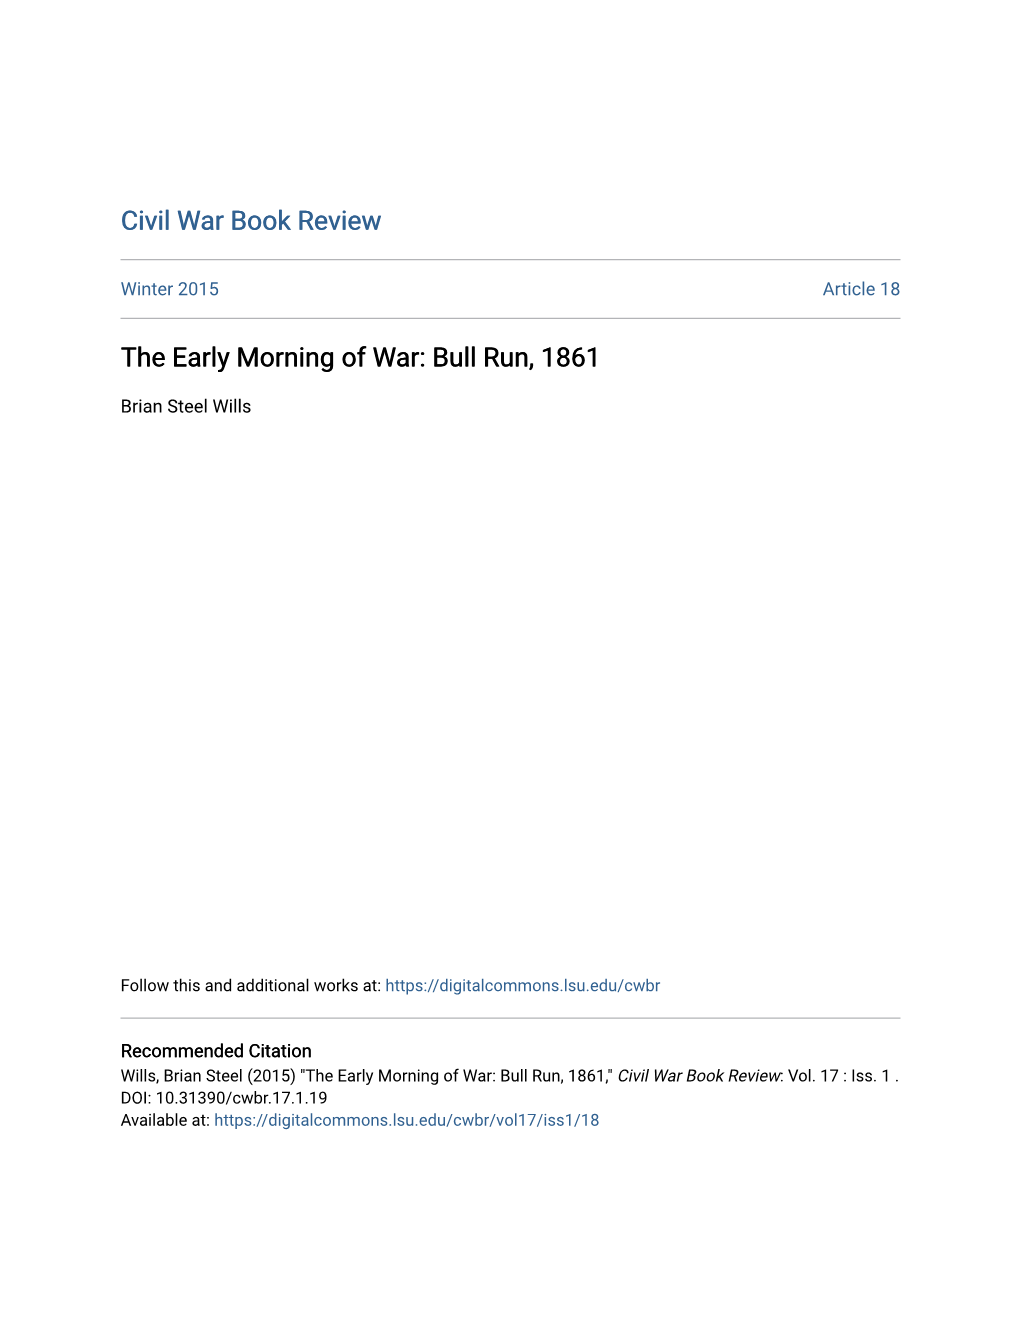 The Early Morning of War: Bull Run, 1861